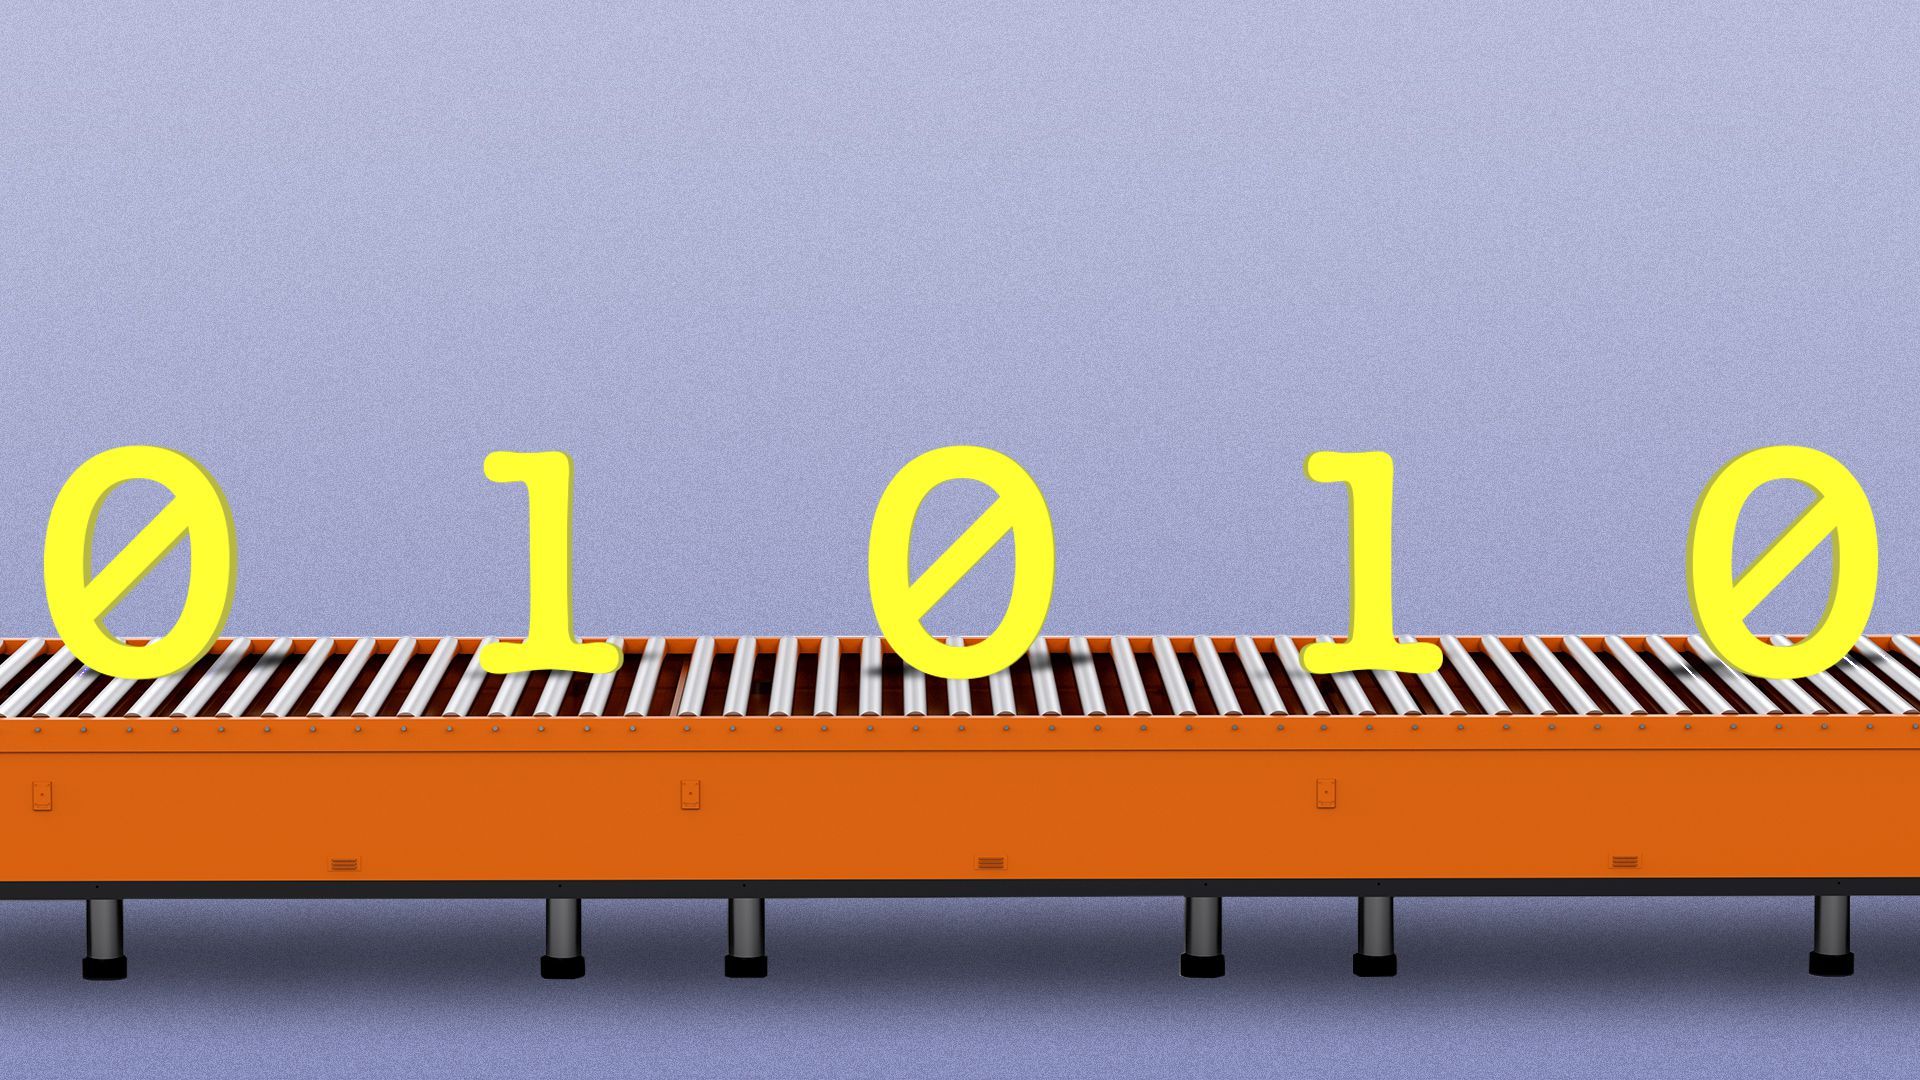 Illustration of binary code on a conveyor belt